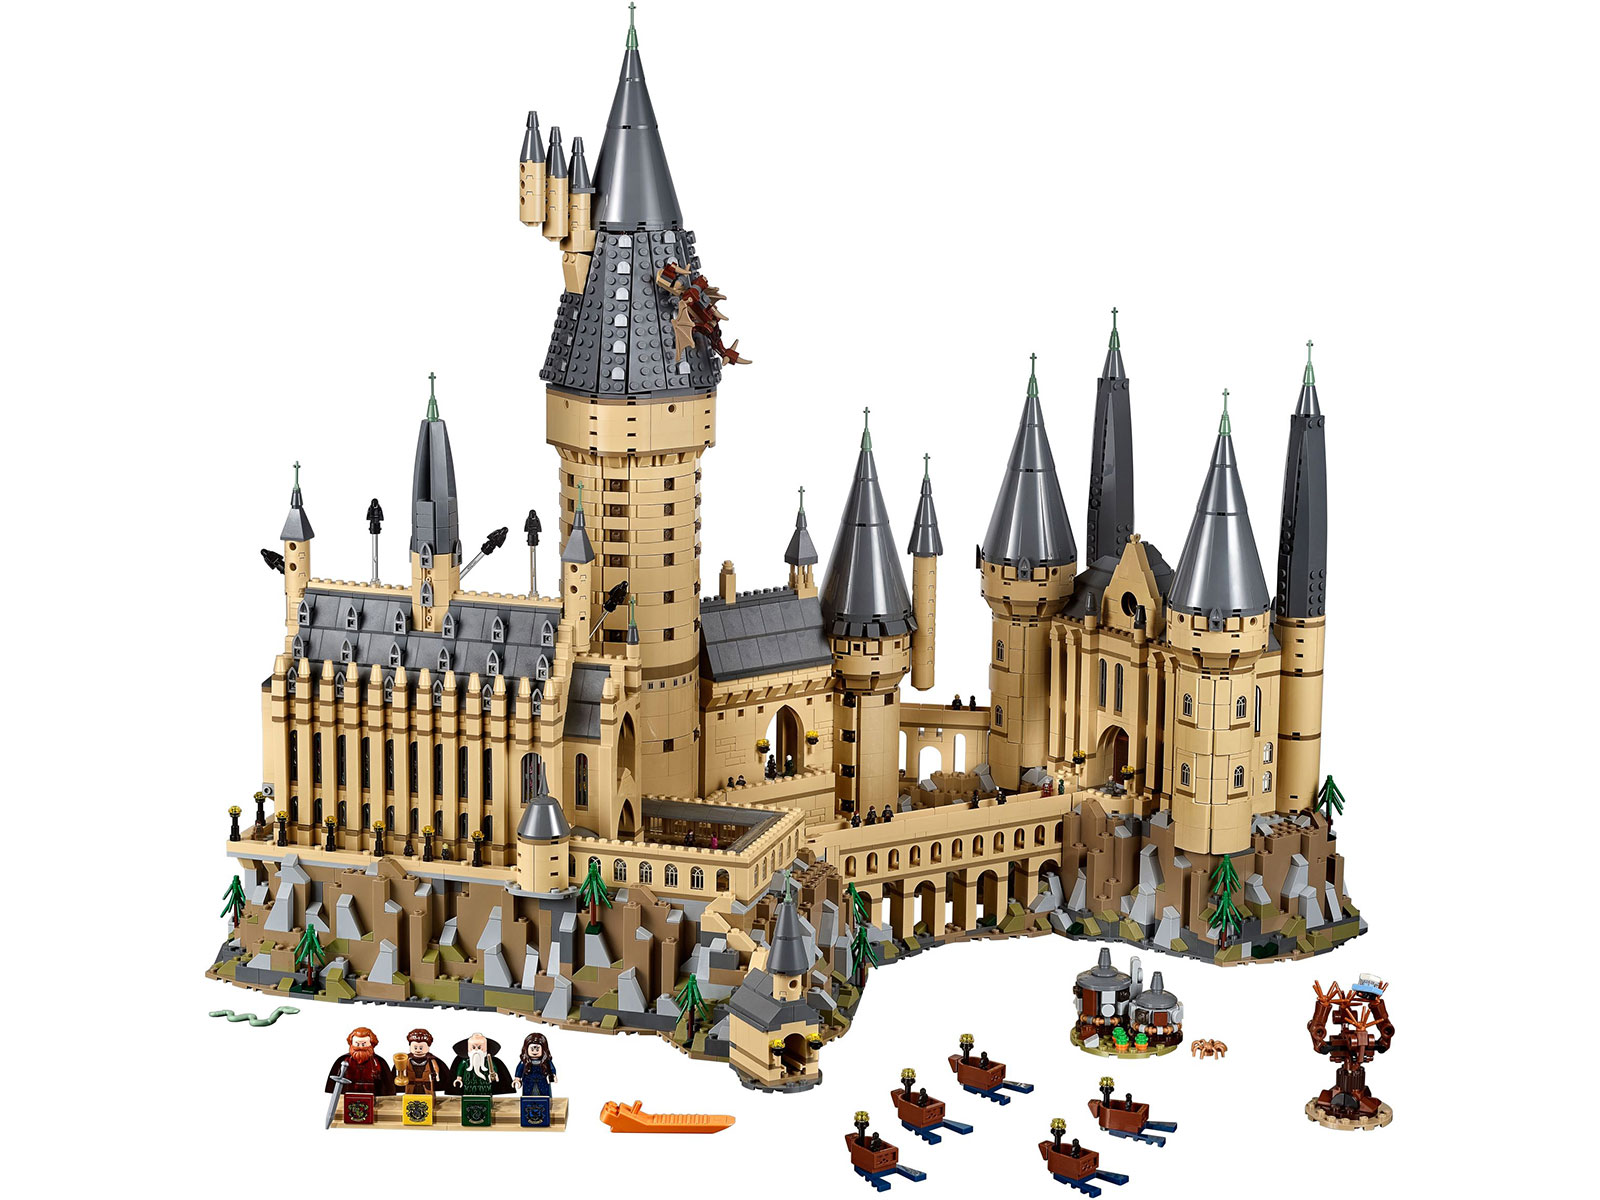 LEGO® Harry Potter 71043 - Schloss Hogwarts™